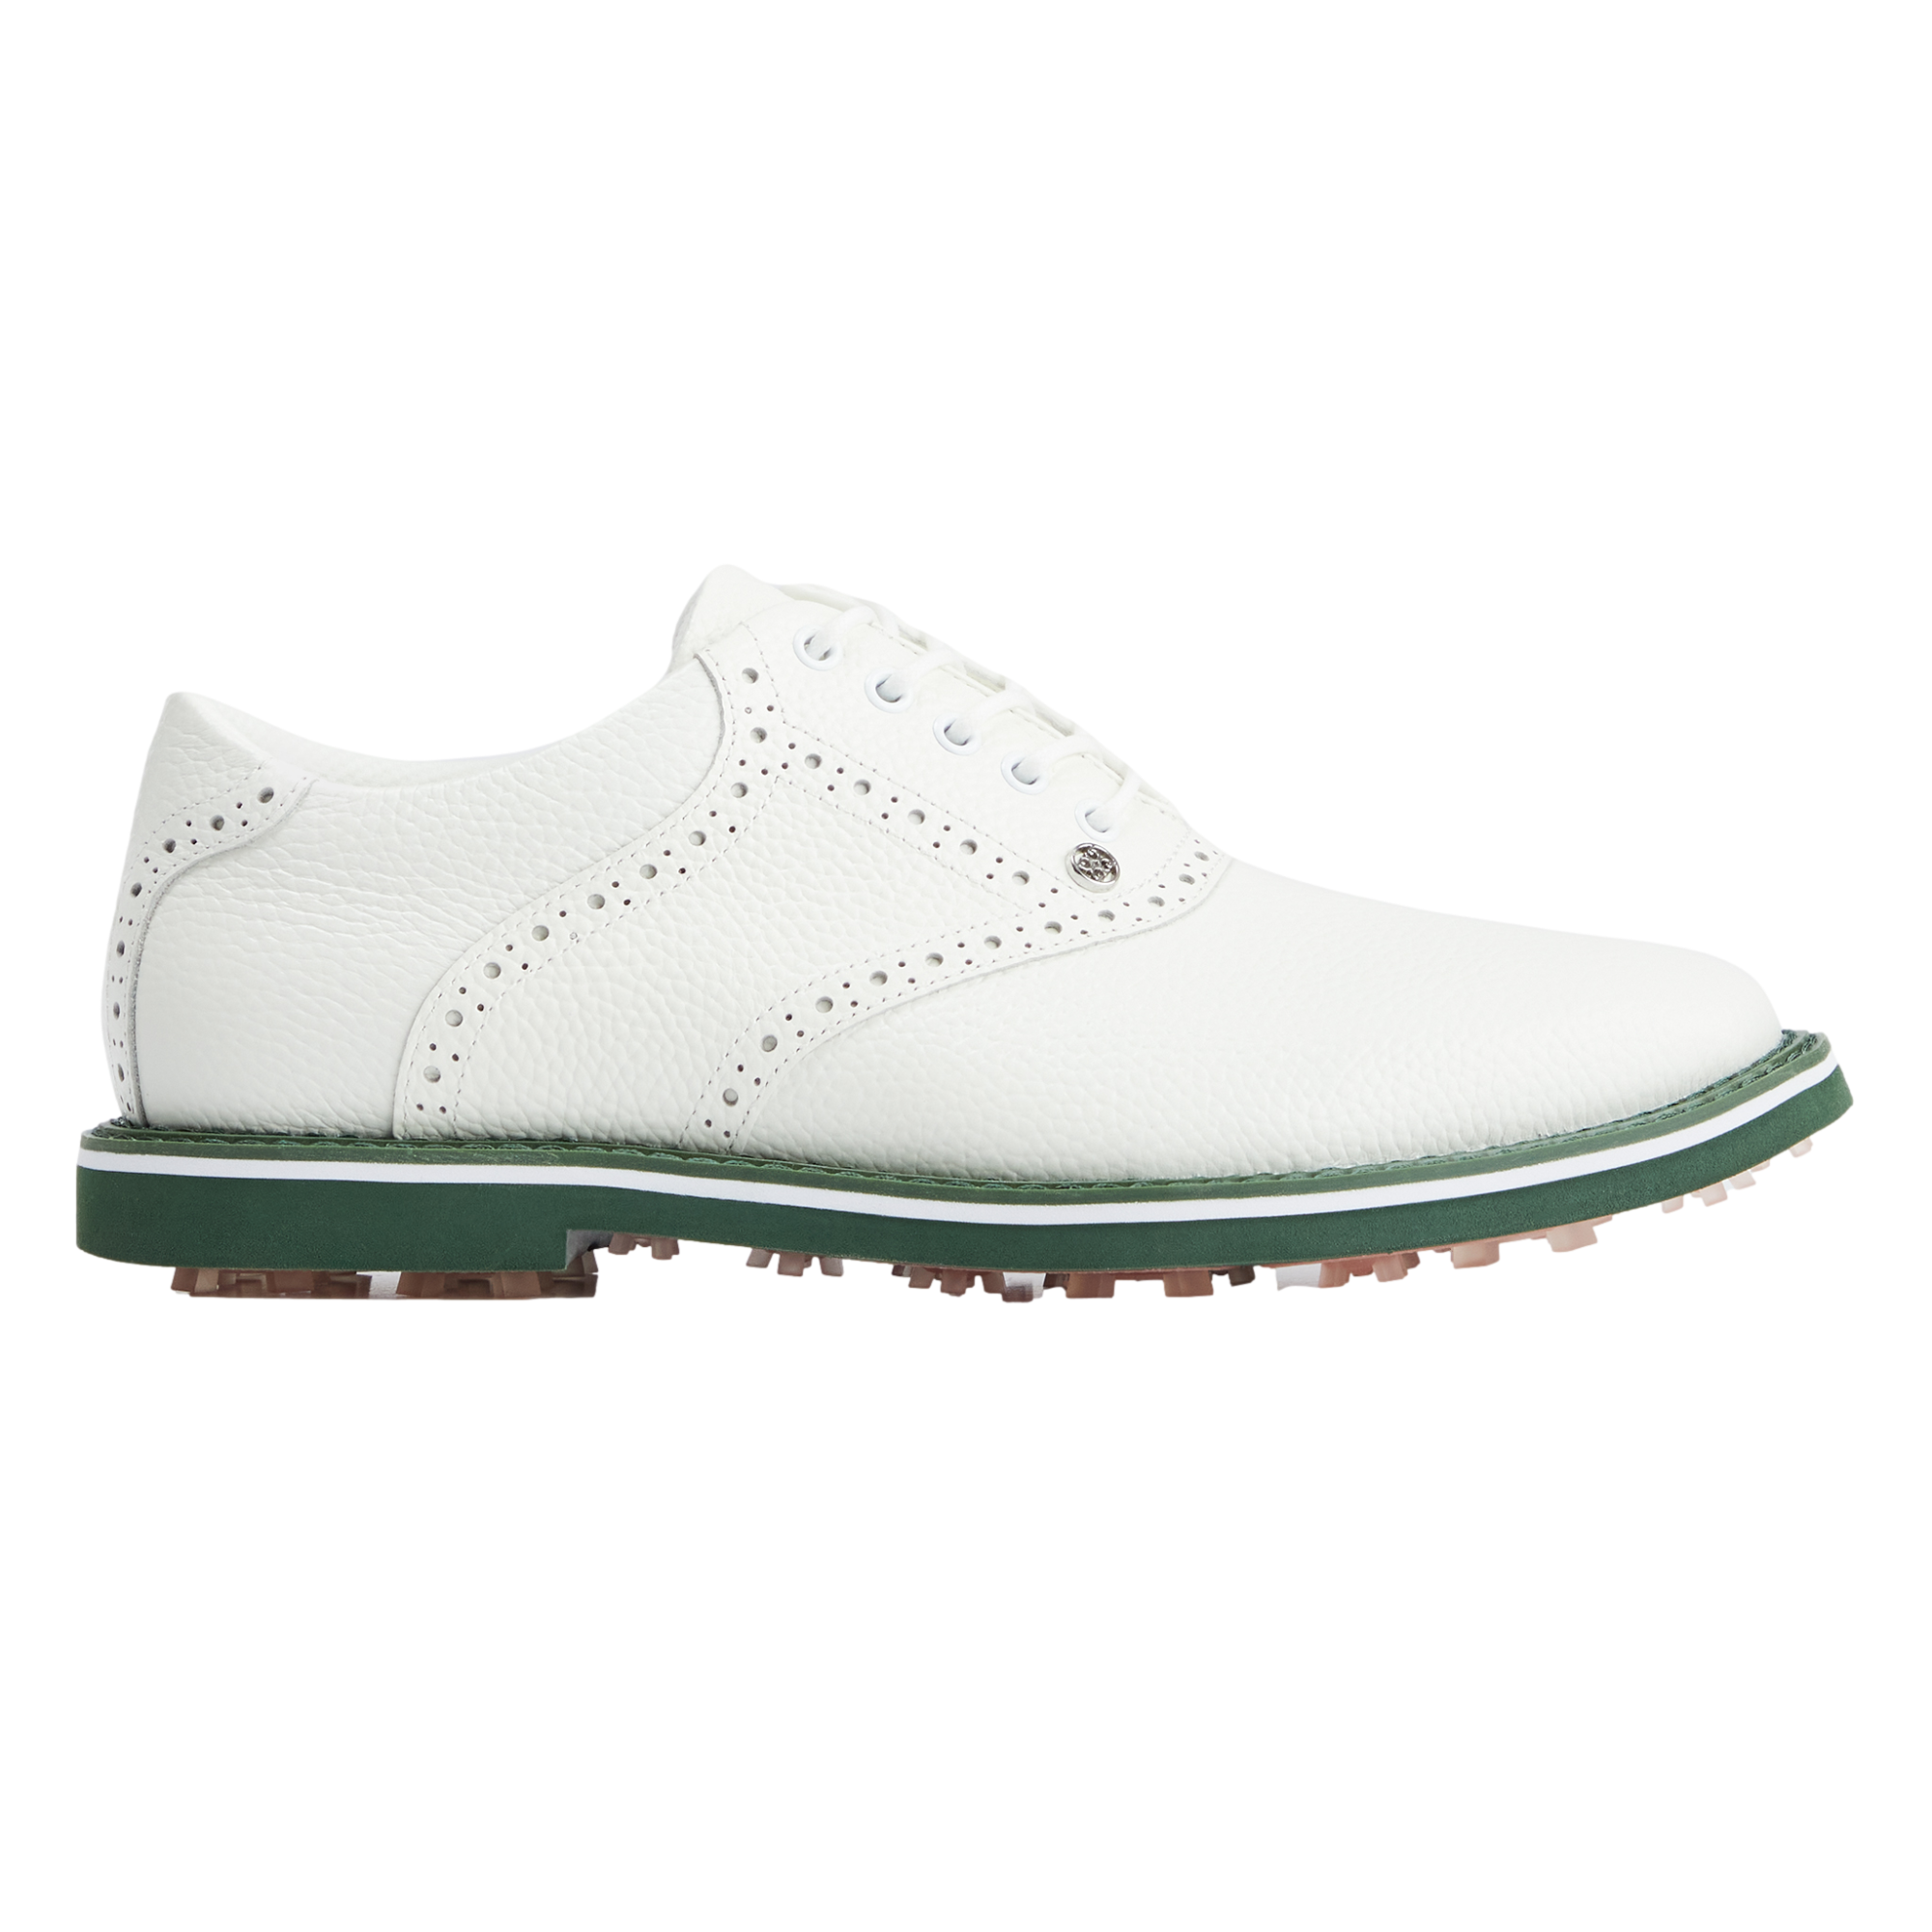 G/FORE x Barstool Golf Gallivanter Men's Golf Shoe